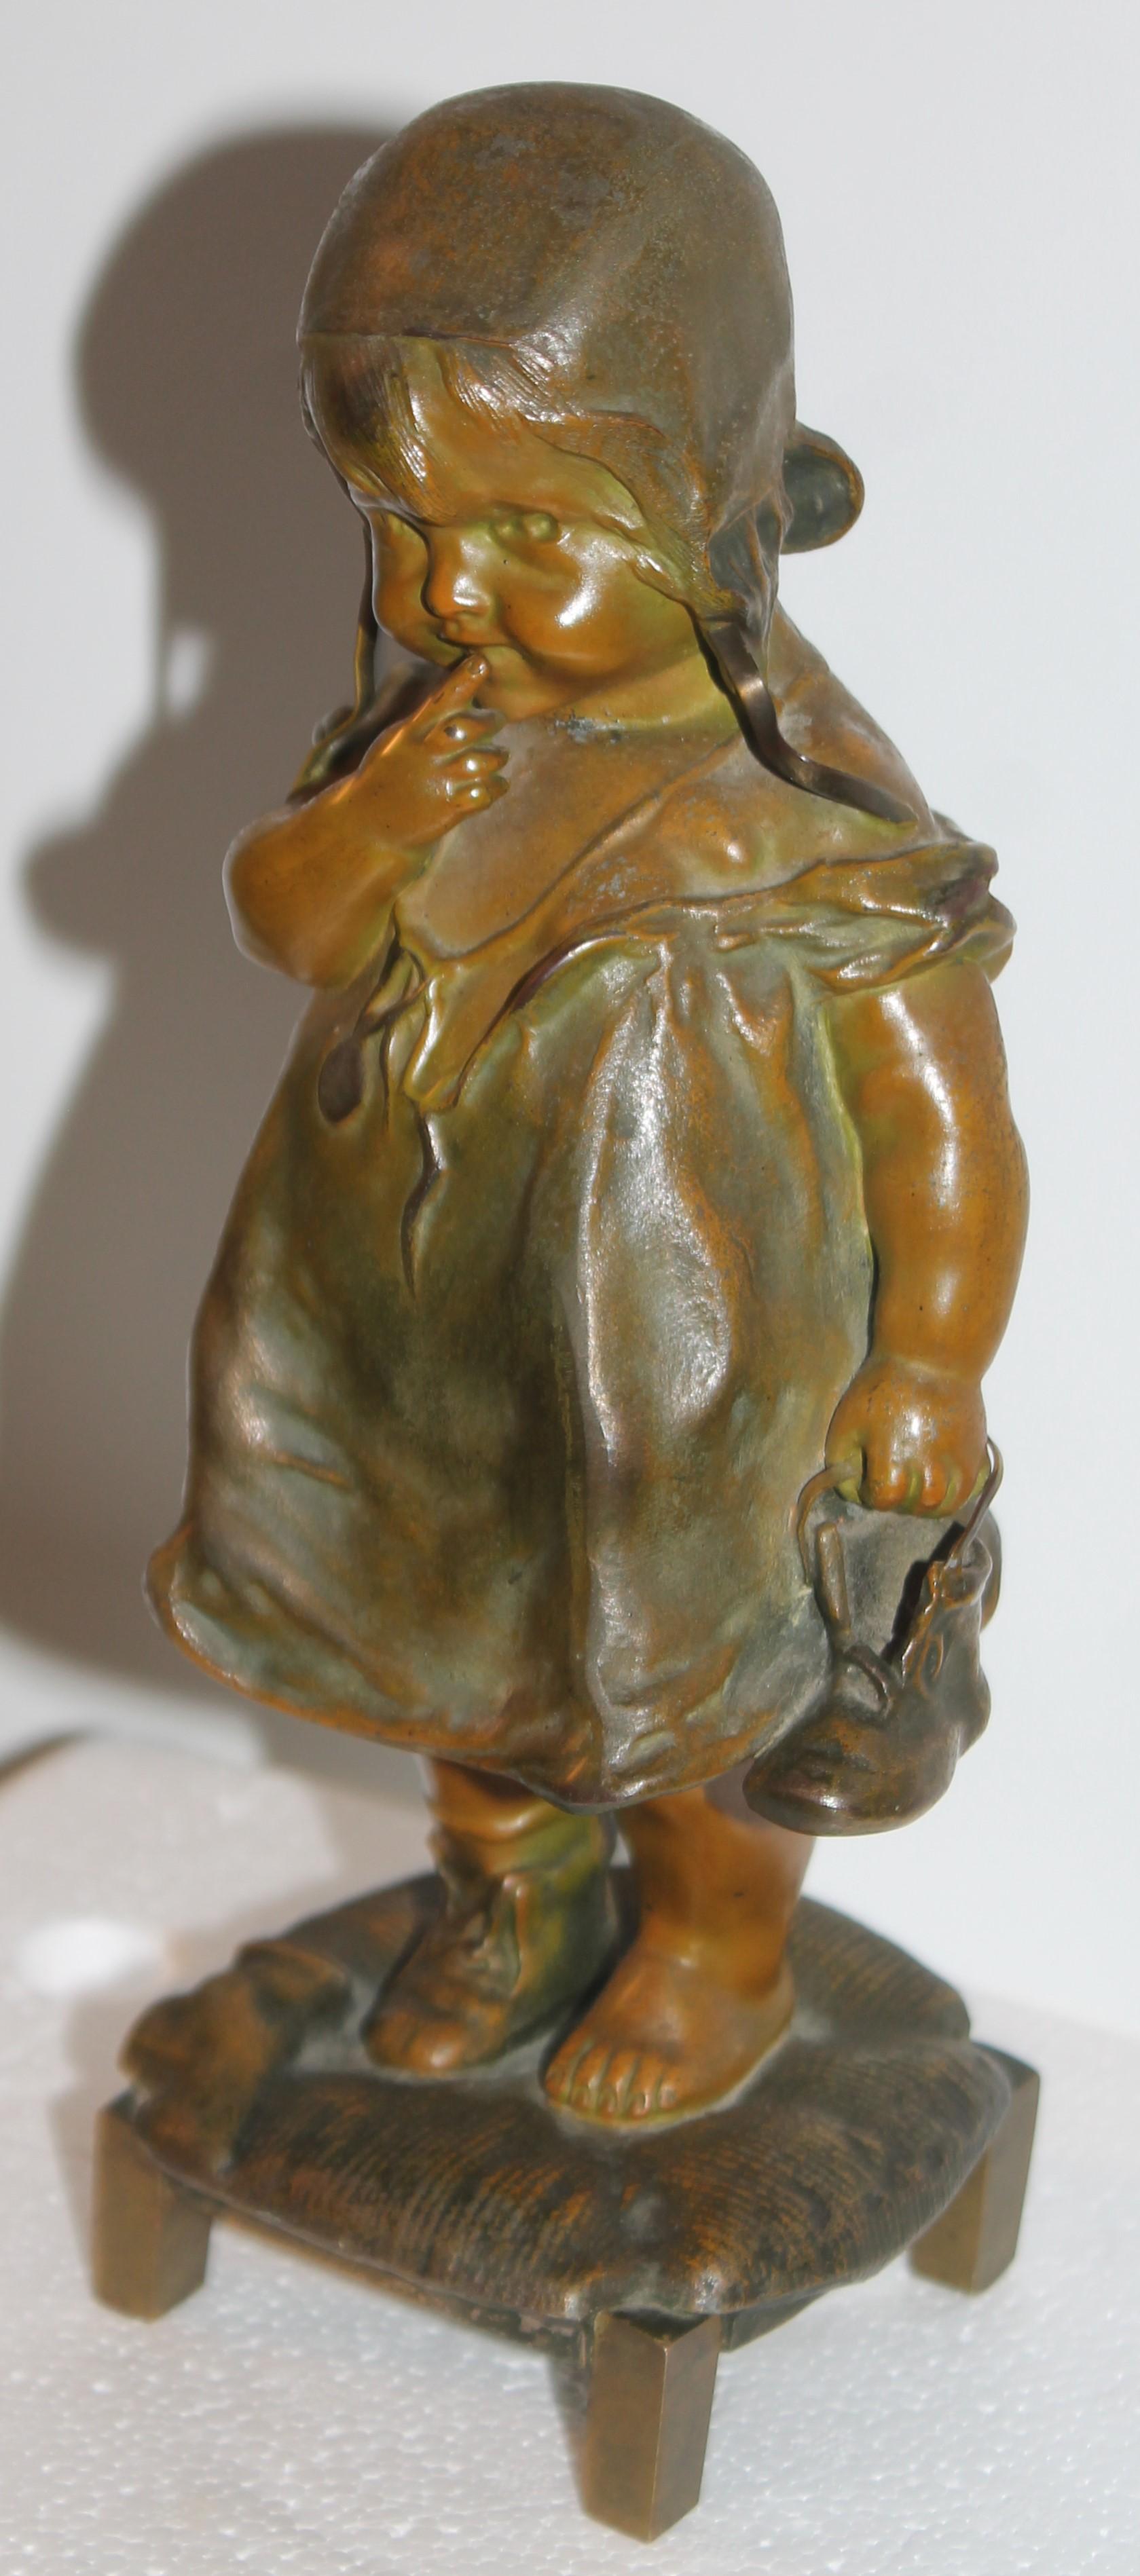 Hand-Crafted Juan Clara Art Noveau Girl on Stool  Bronze Sculpture Holding Shoe in Hand